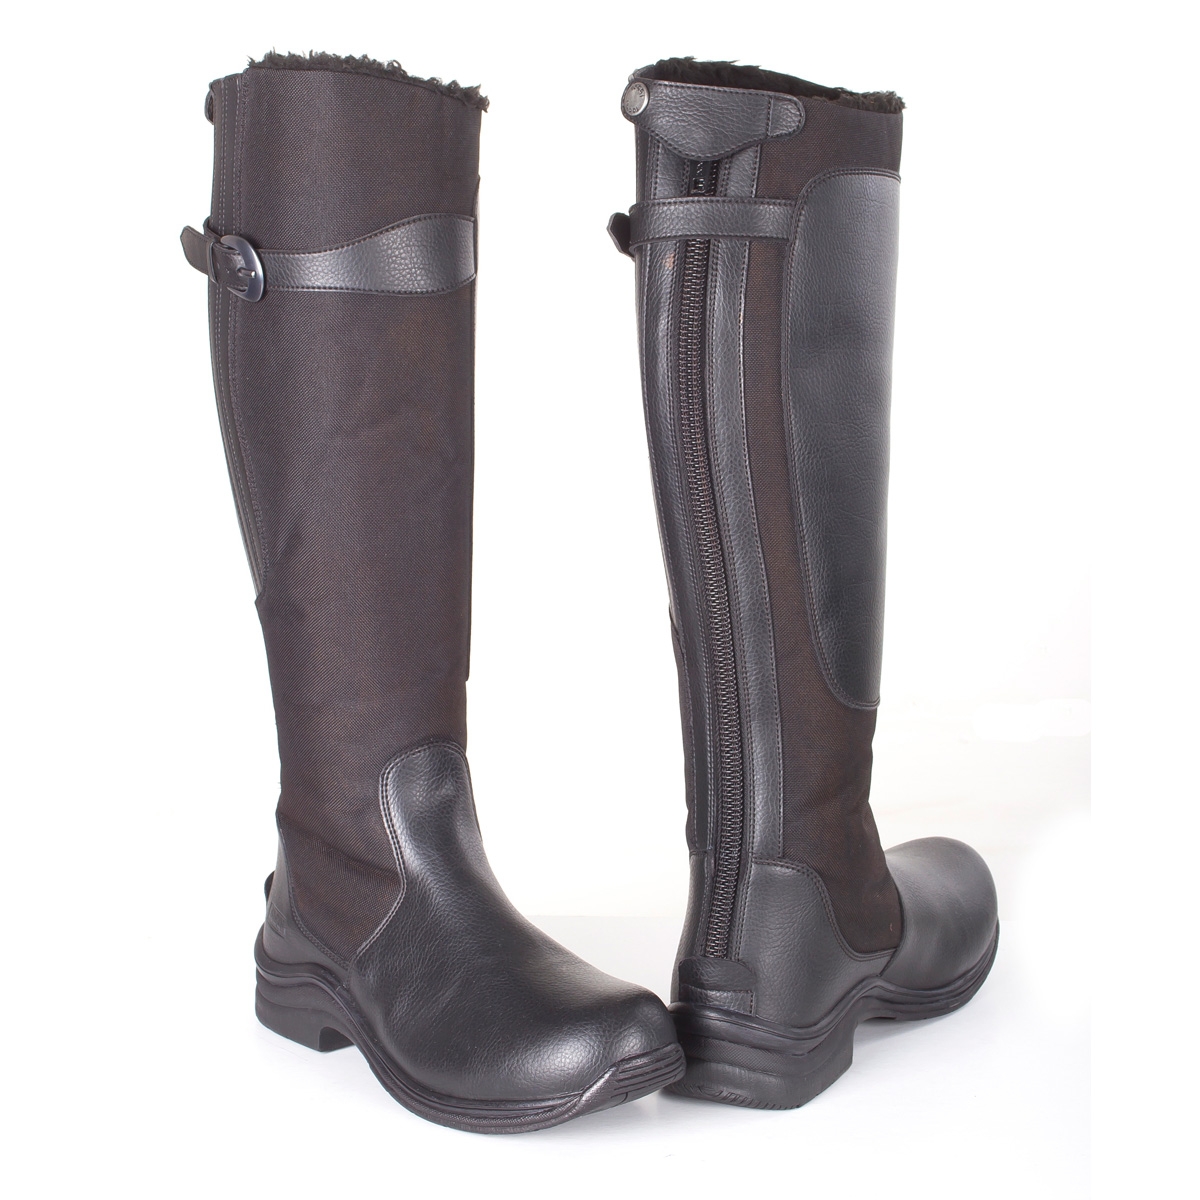 toggi boots image of toggi chinook fleece lined riding boots (womens) - black ... mmazjdp